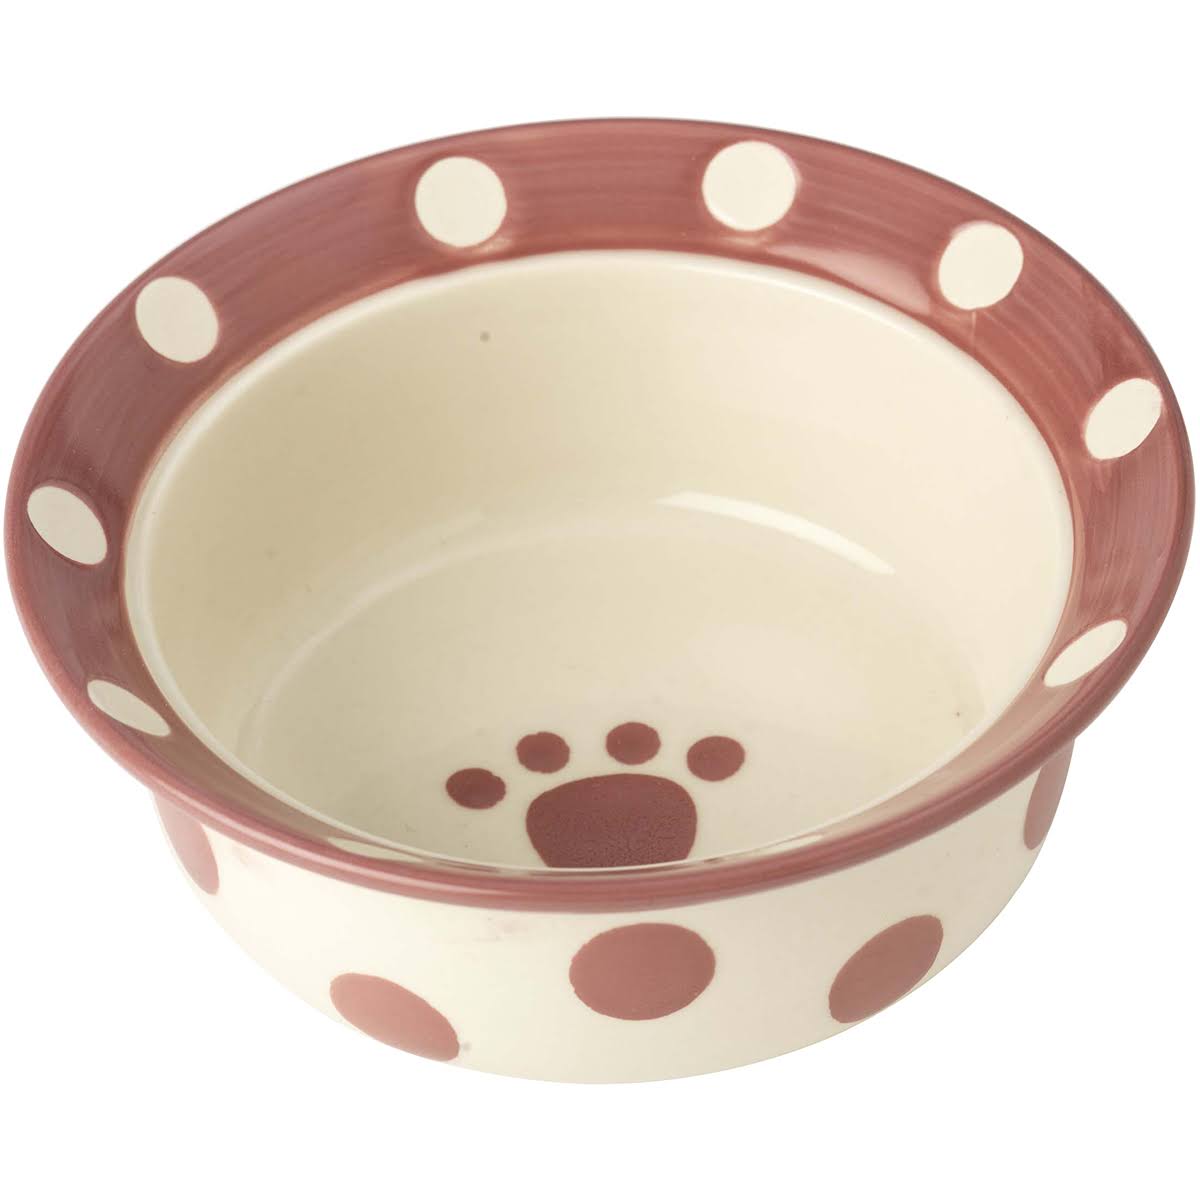 Petrageous Designs Polka Paws Pet Bowl - Pink and Cream, 6"